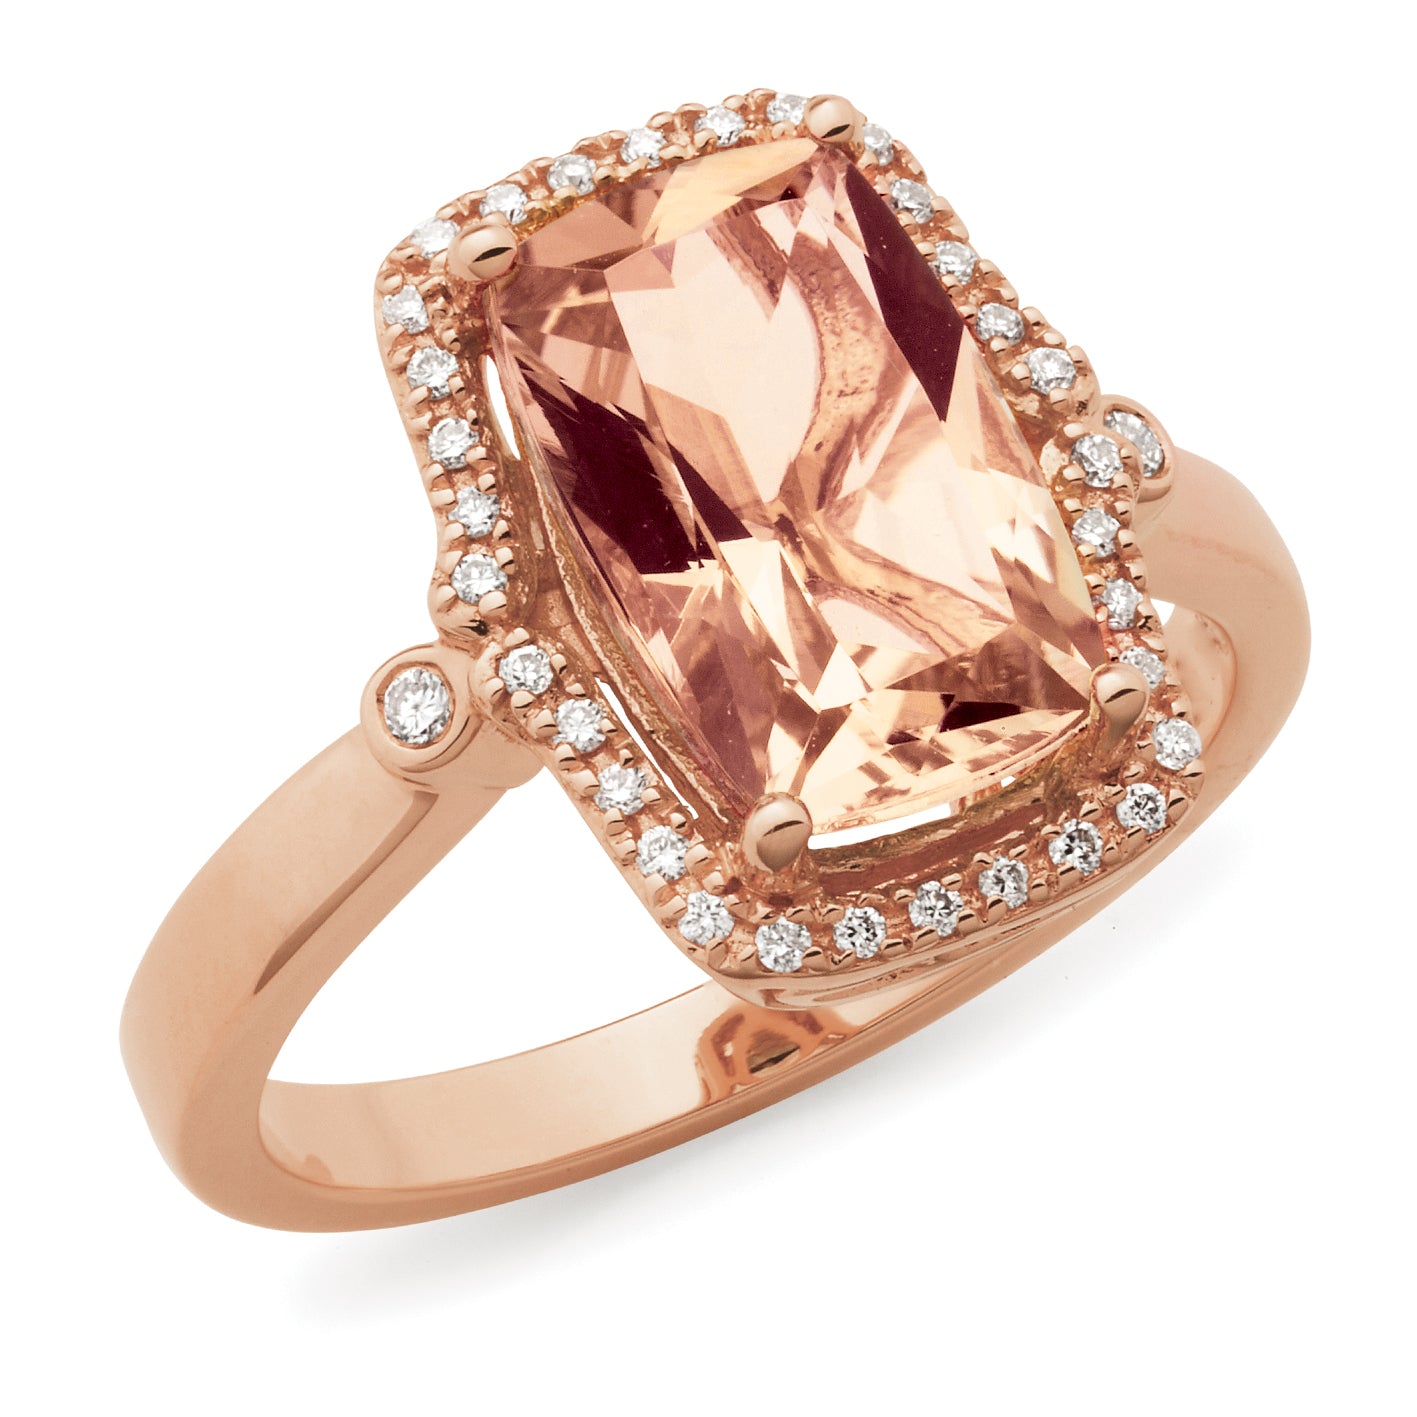 Lillian' Morganite & Diamond Ring in 9ct Rose Gold